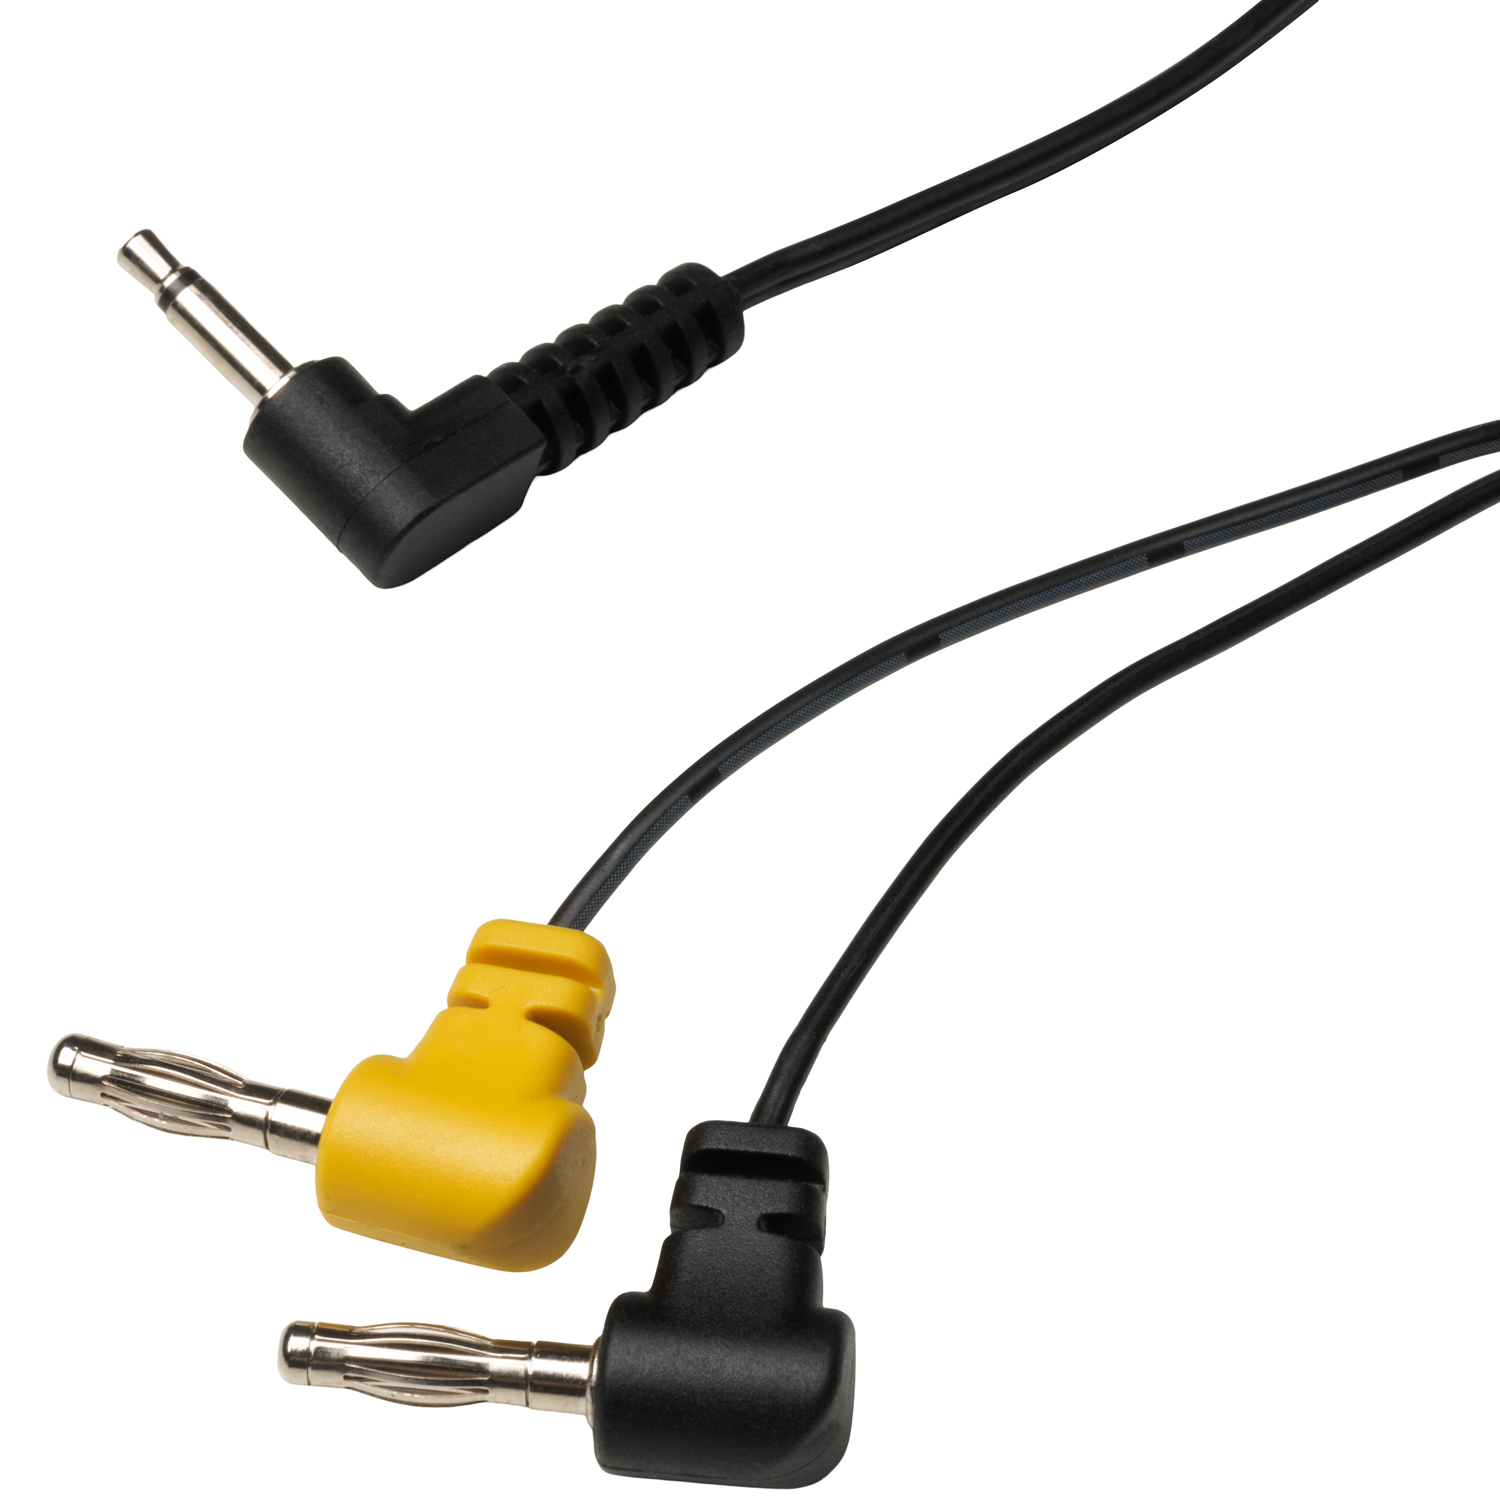 E-Stim Low Profile Connection kabel 4 mm    - Svart